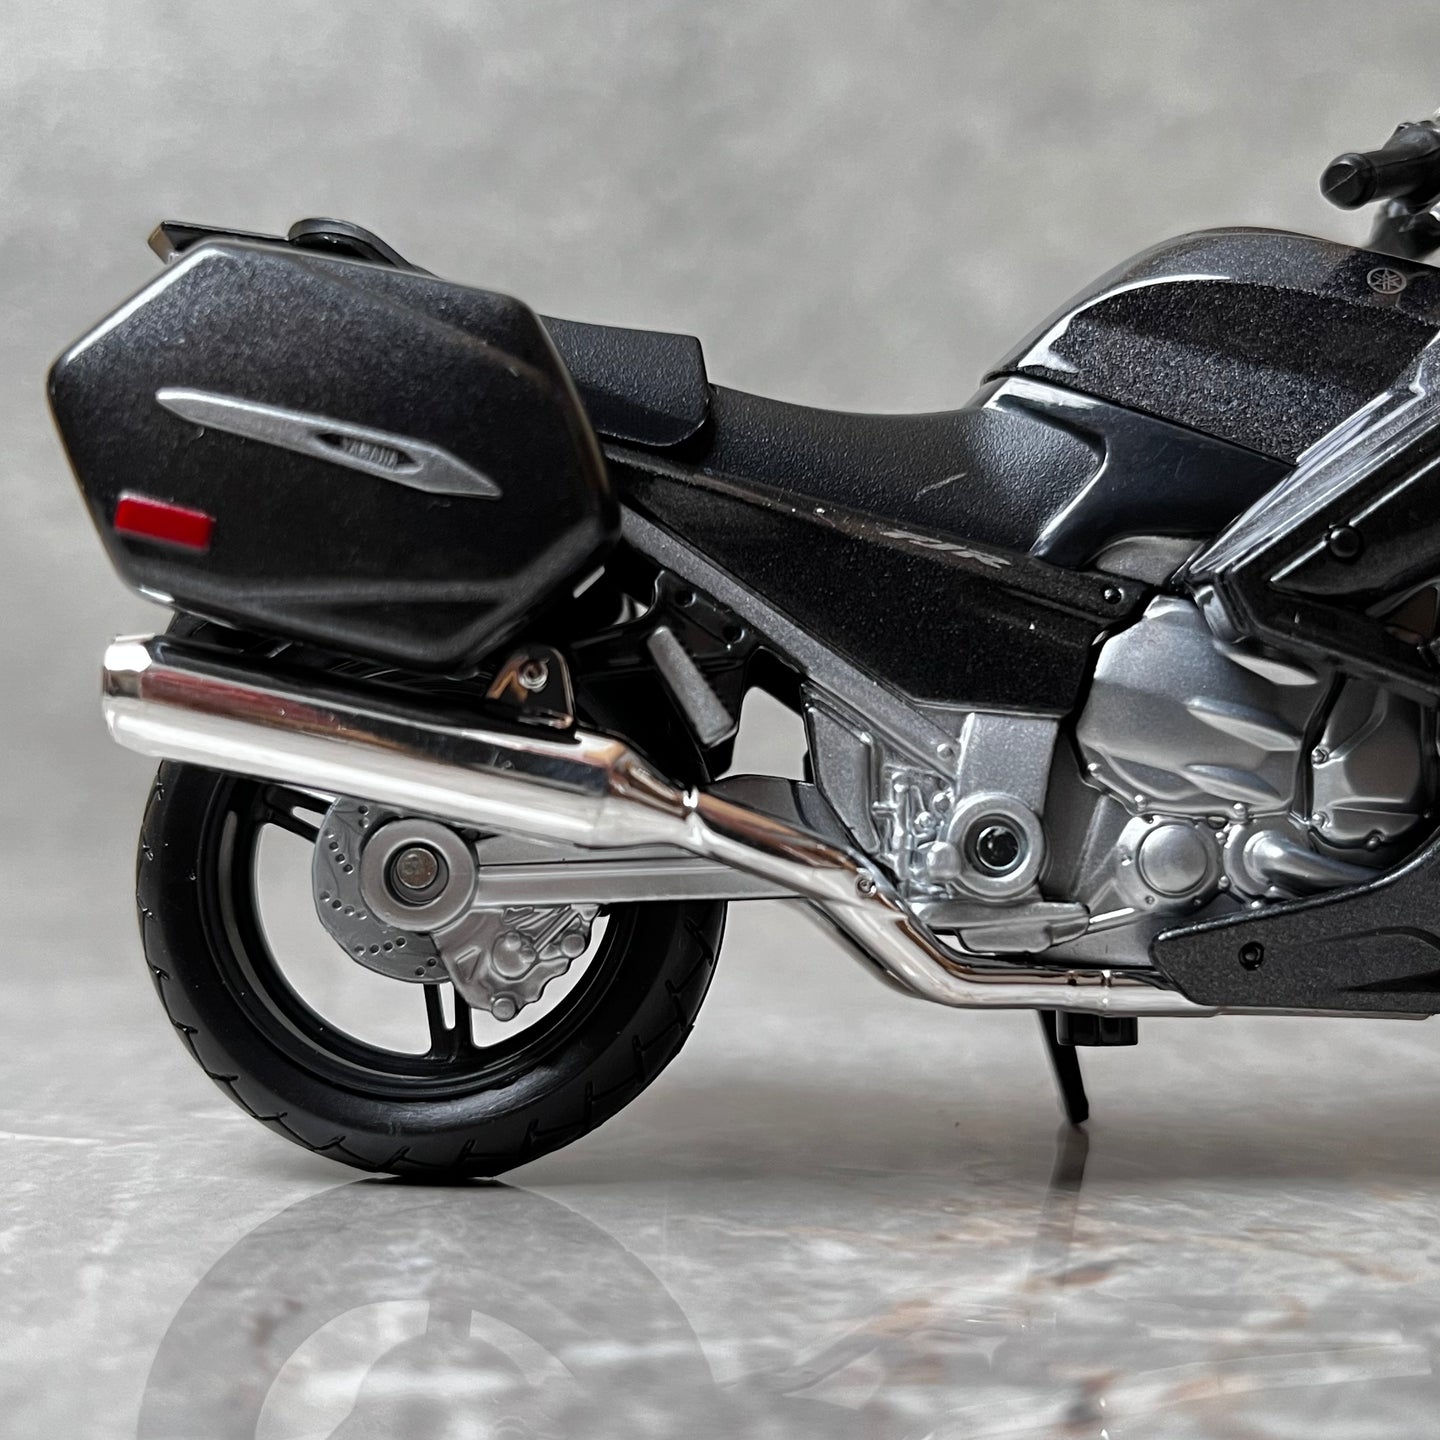 Yamaha FJR1300 AS Diecast Model Bike 1:18 Motorcycle Model By Bburago